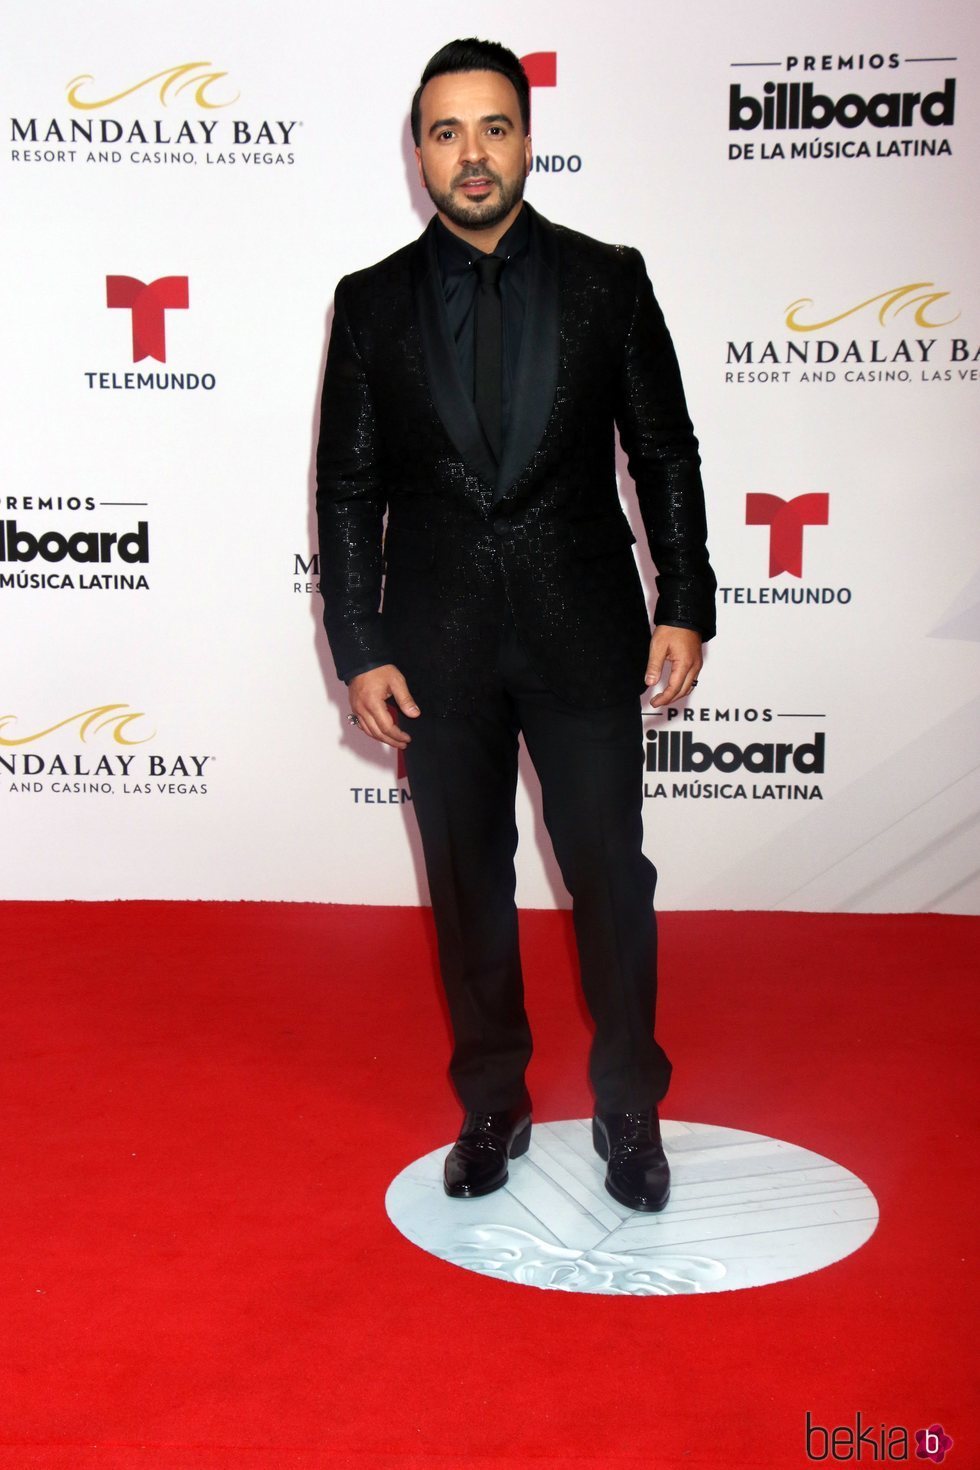 Luis Fonsi en los Billboard Latin Music